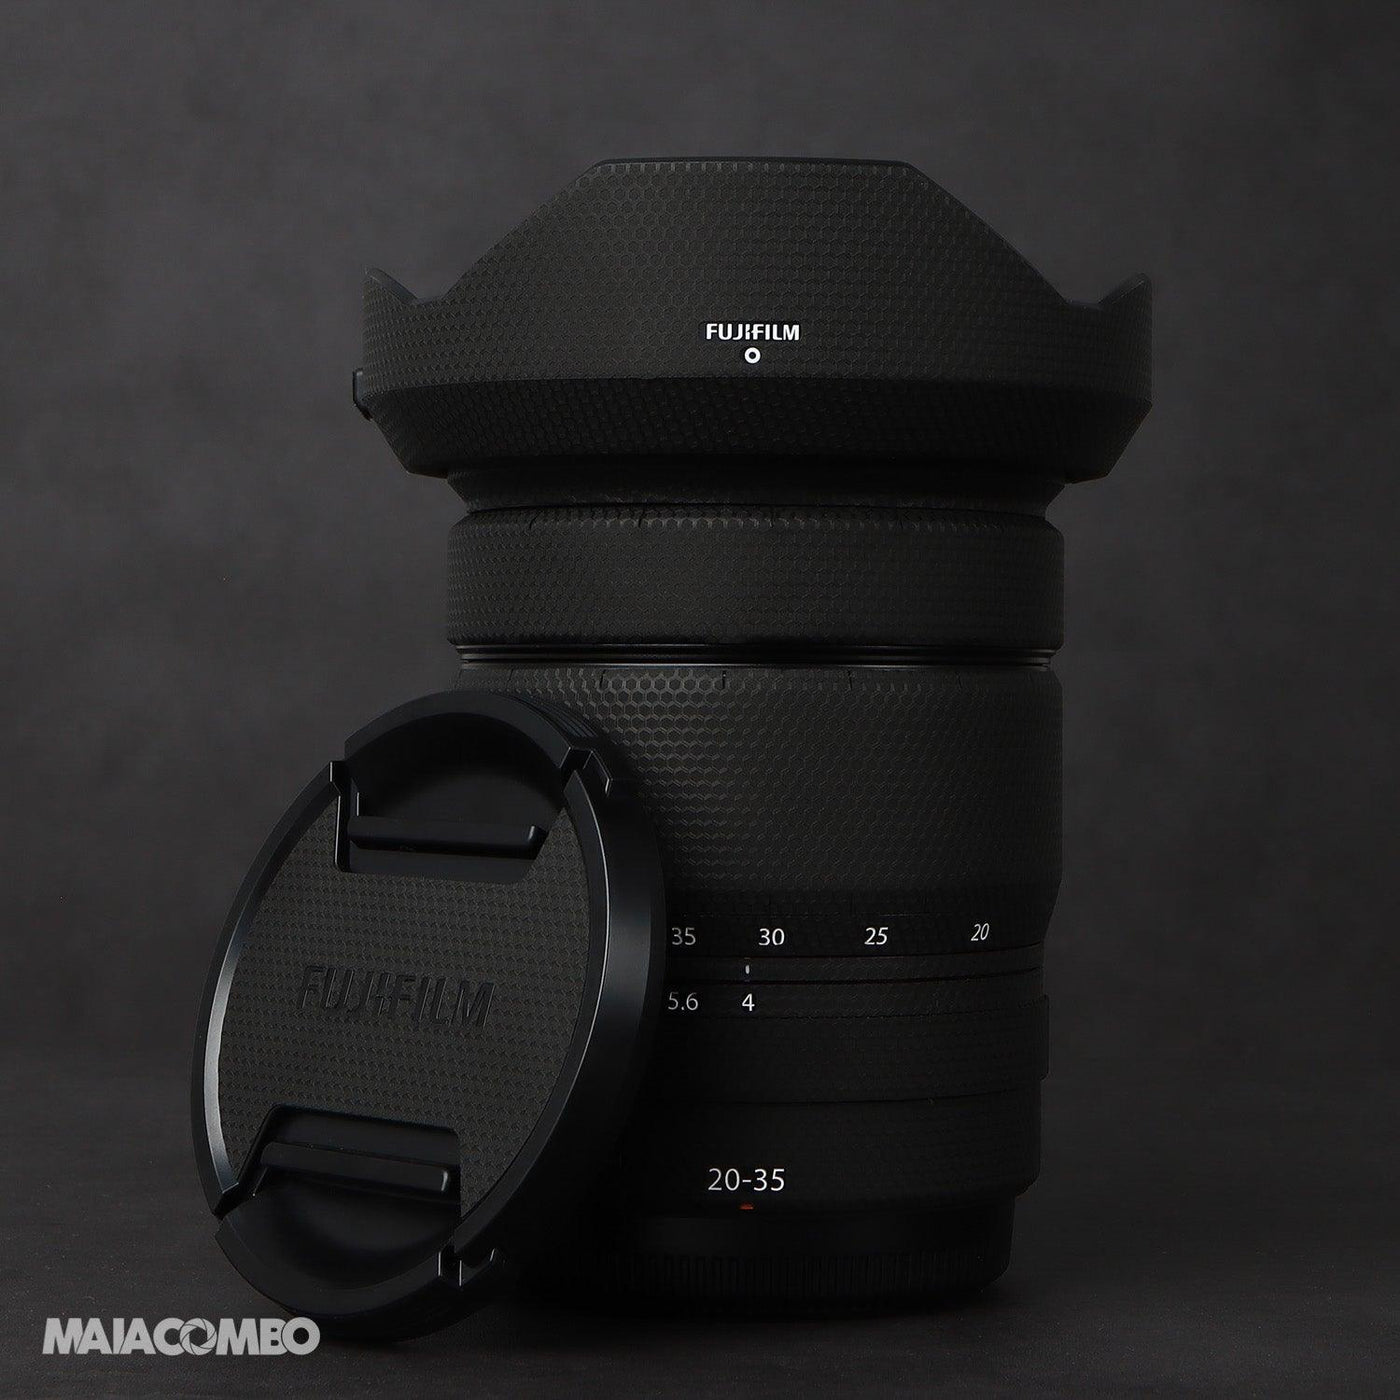 Fujifilm GF 20-35mm F/4 R WR Lens Skin - MAIACOMBO